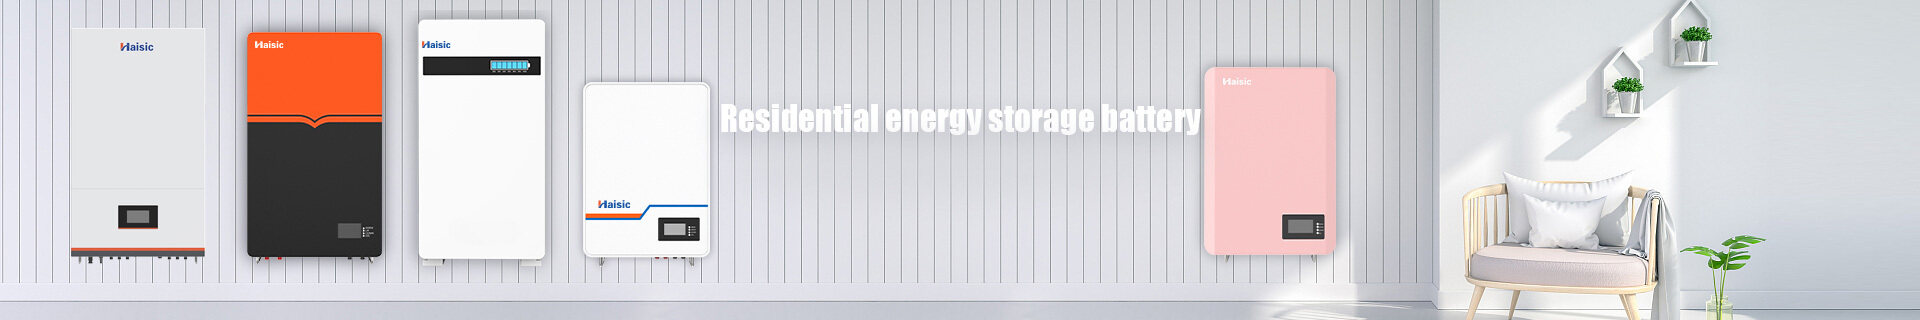 home battery powerwall, powerwall solar energy storage batteries